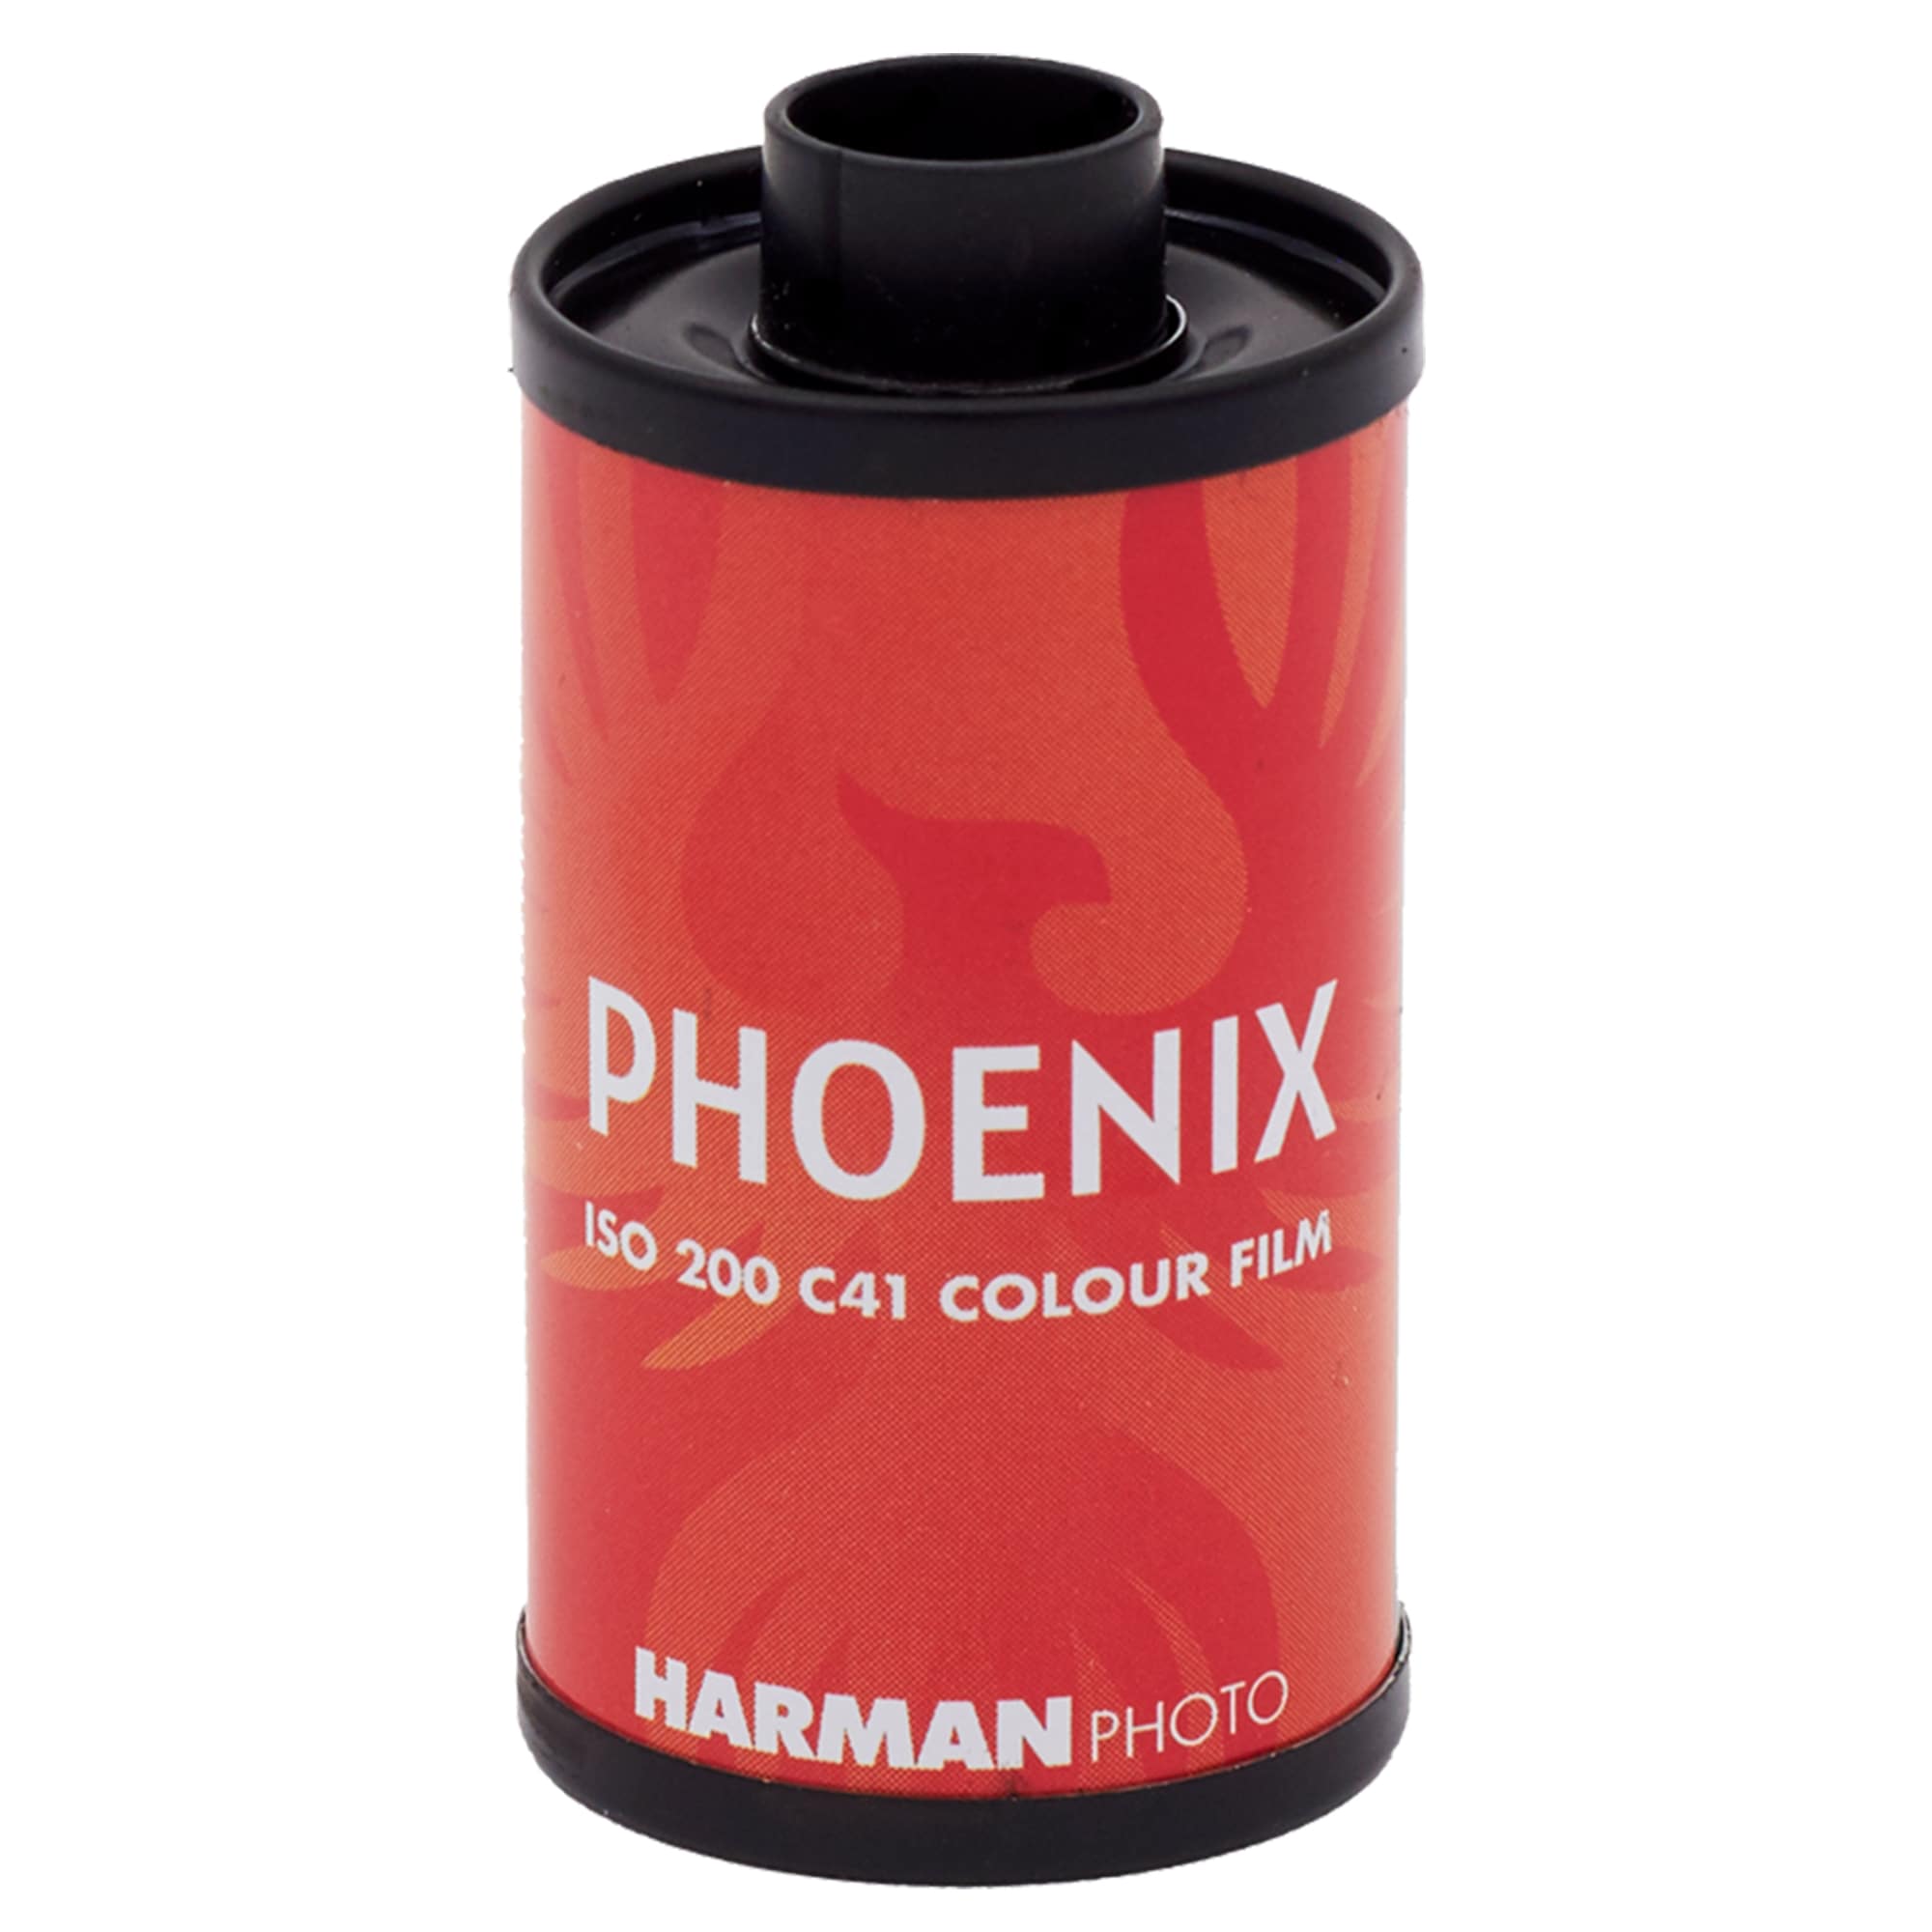 Harman Phoenix 200 135/36